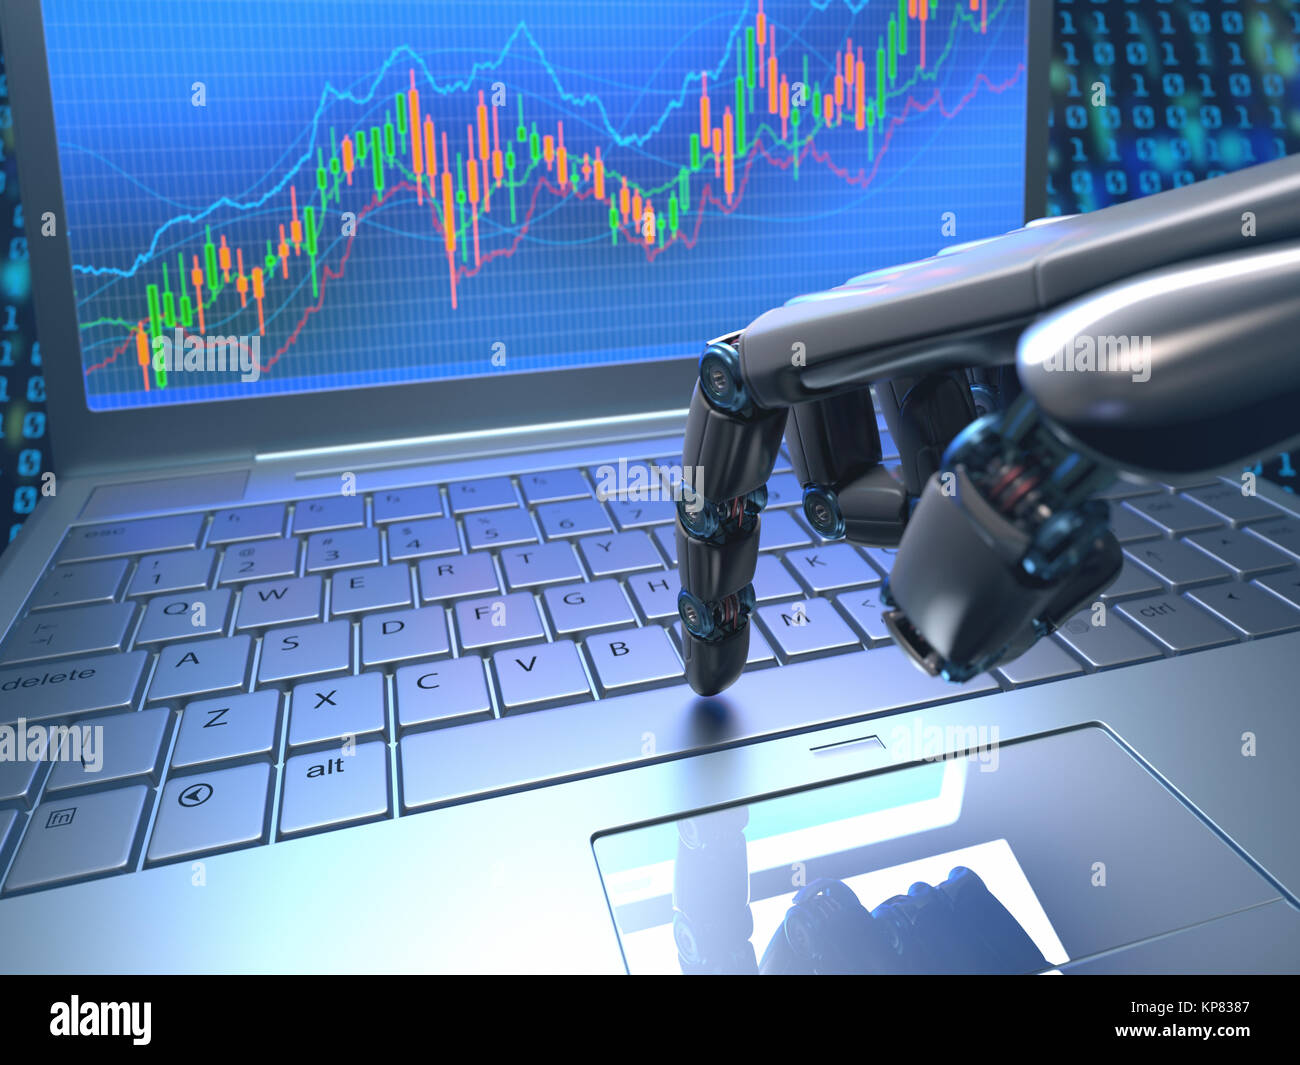 Stock Market Robot Trading Stock Photo